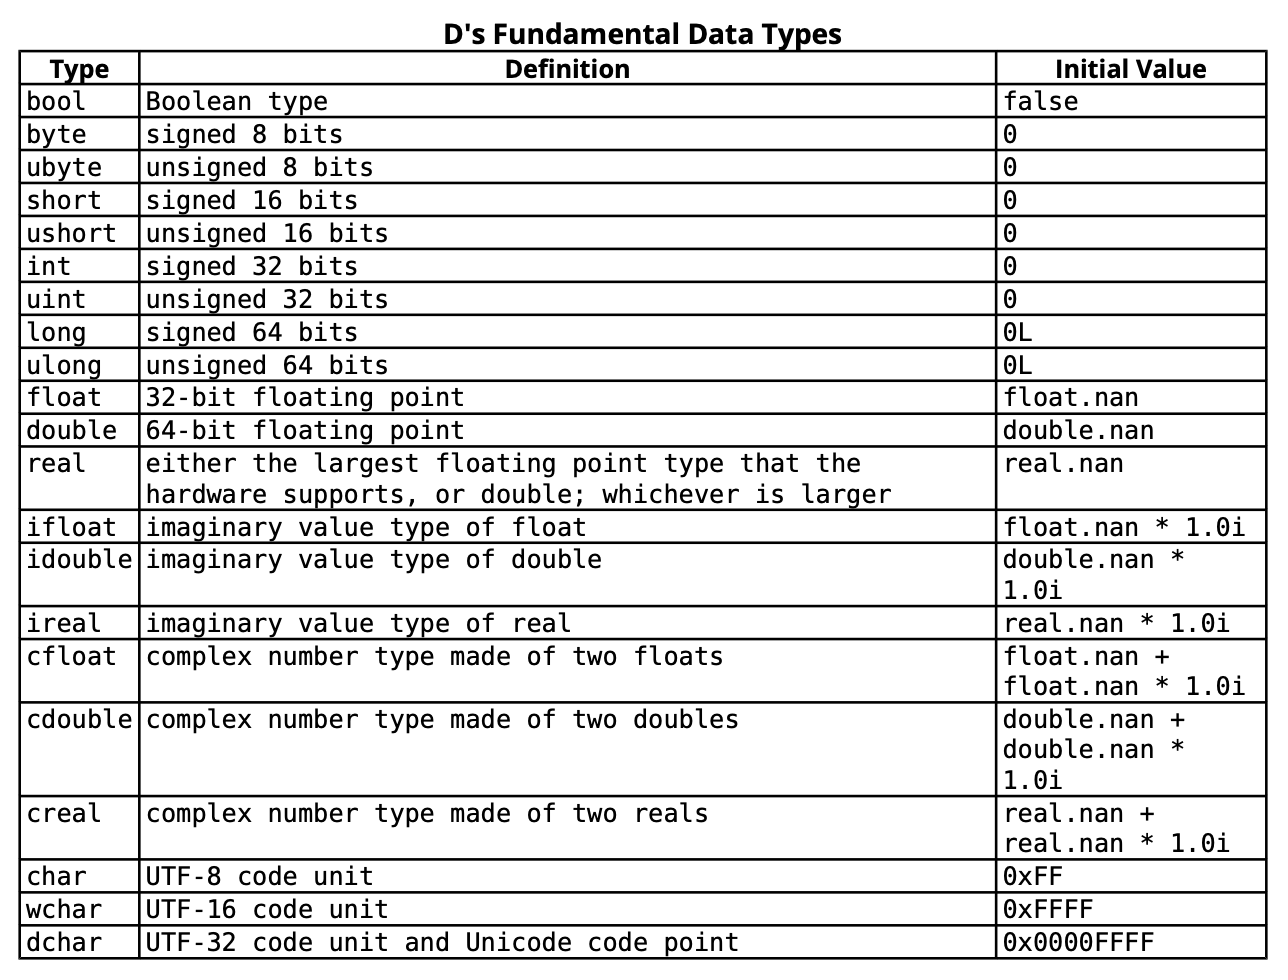 D's fundamental data types